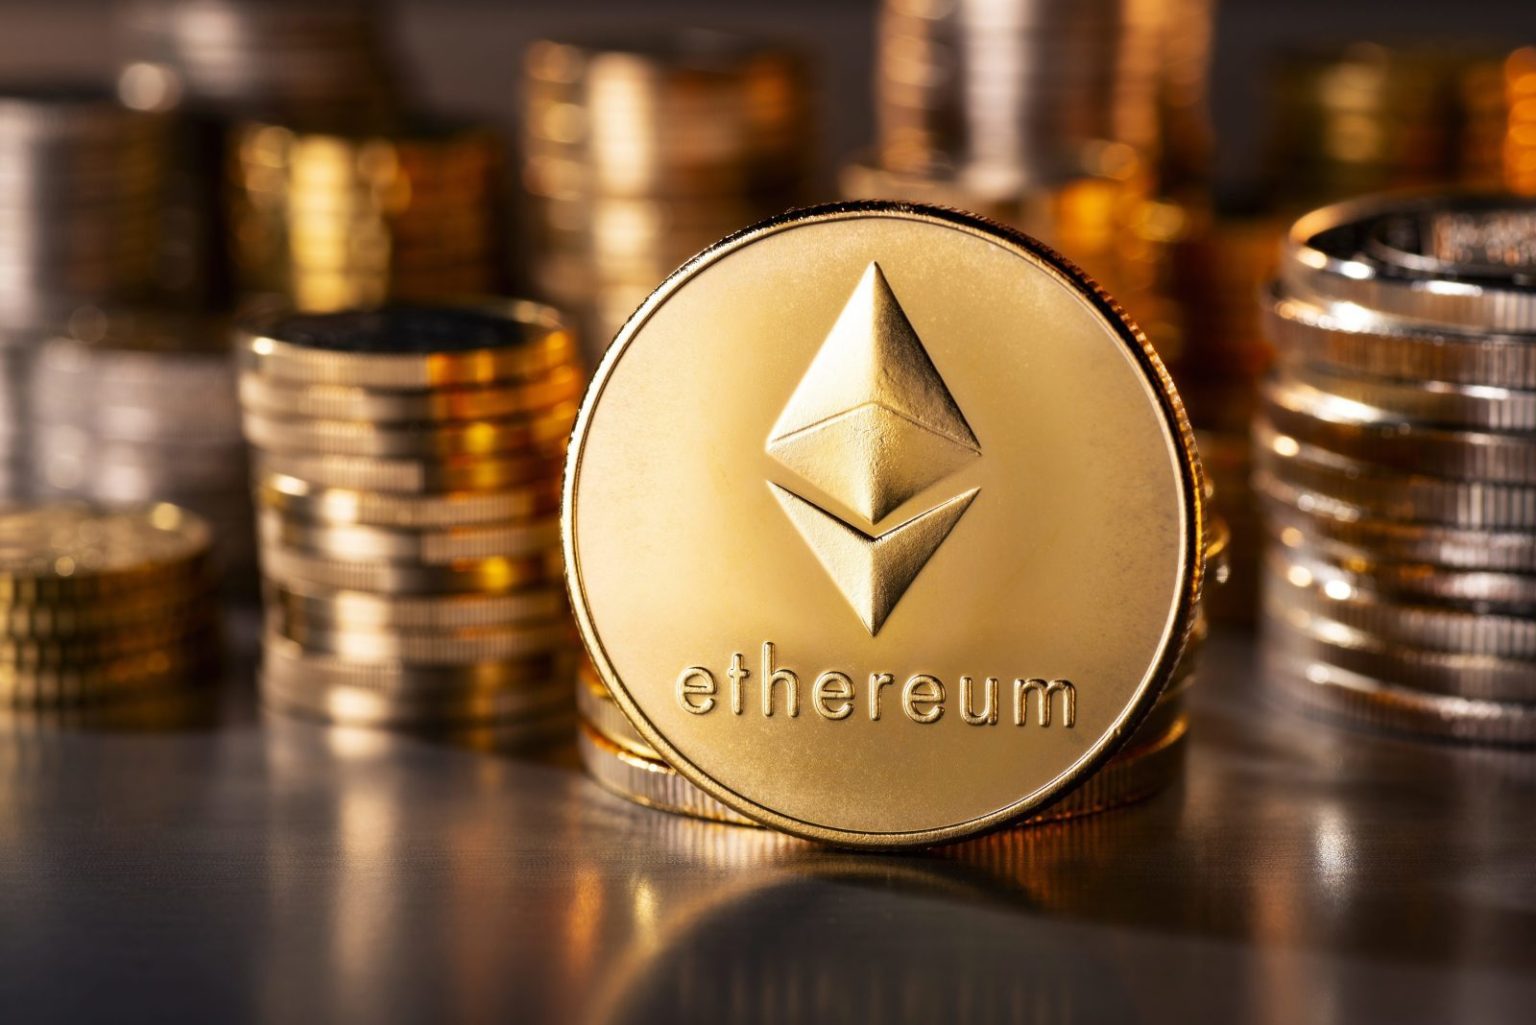 Ethereum Wallet Transfers 81,760 ETH to Binance